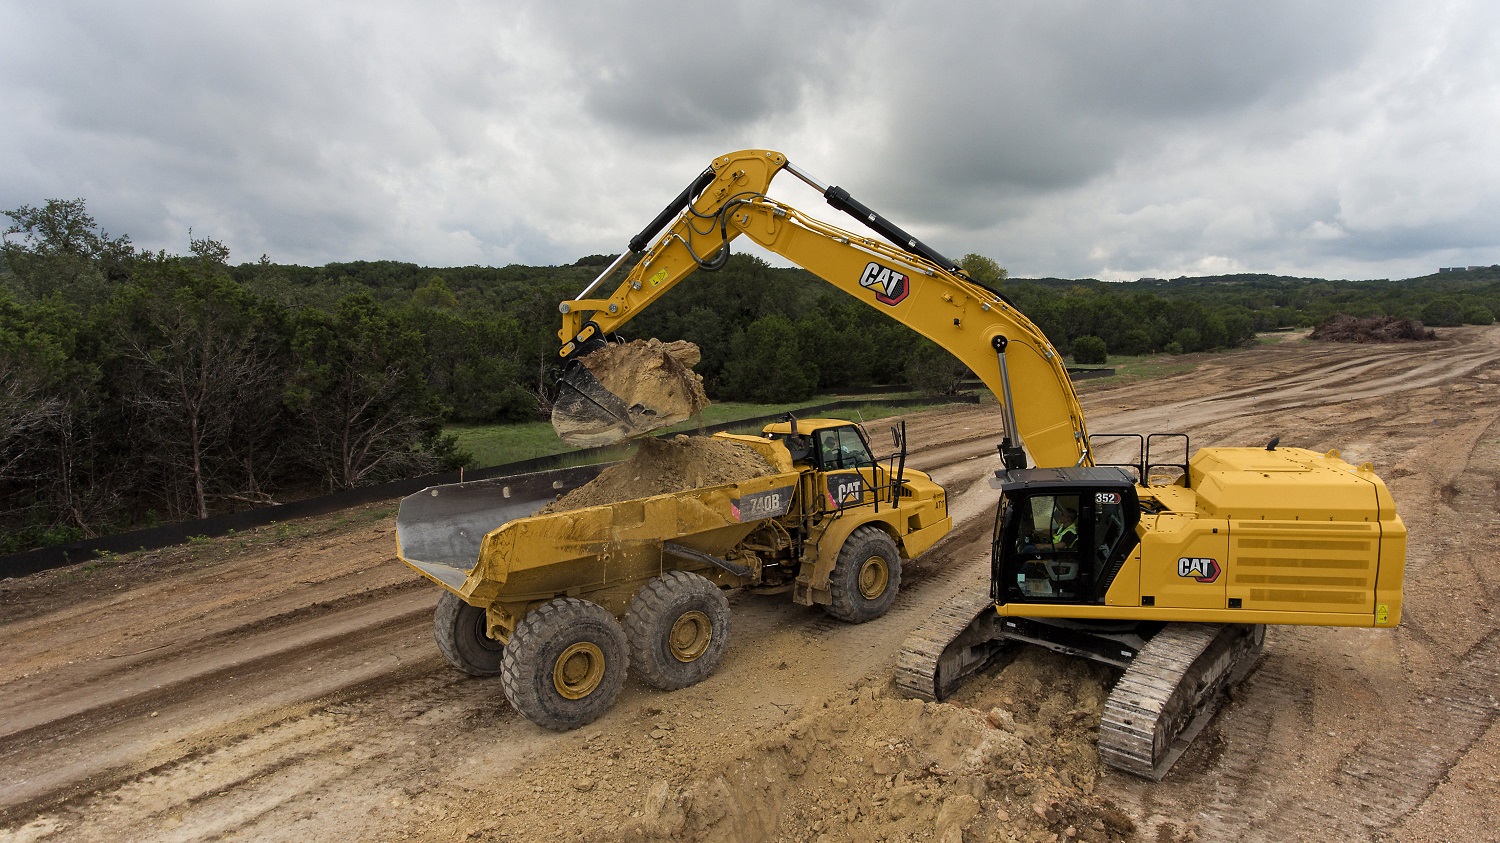 The new Caterpillar 352 Hydraulic Excavator